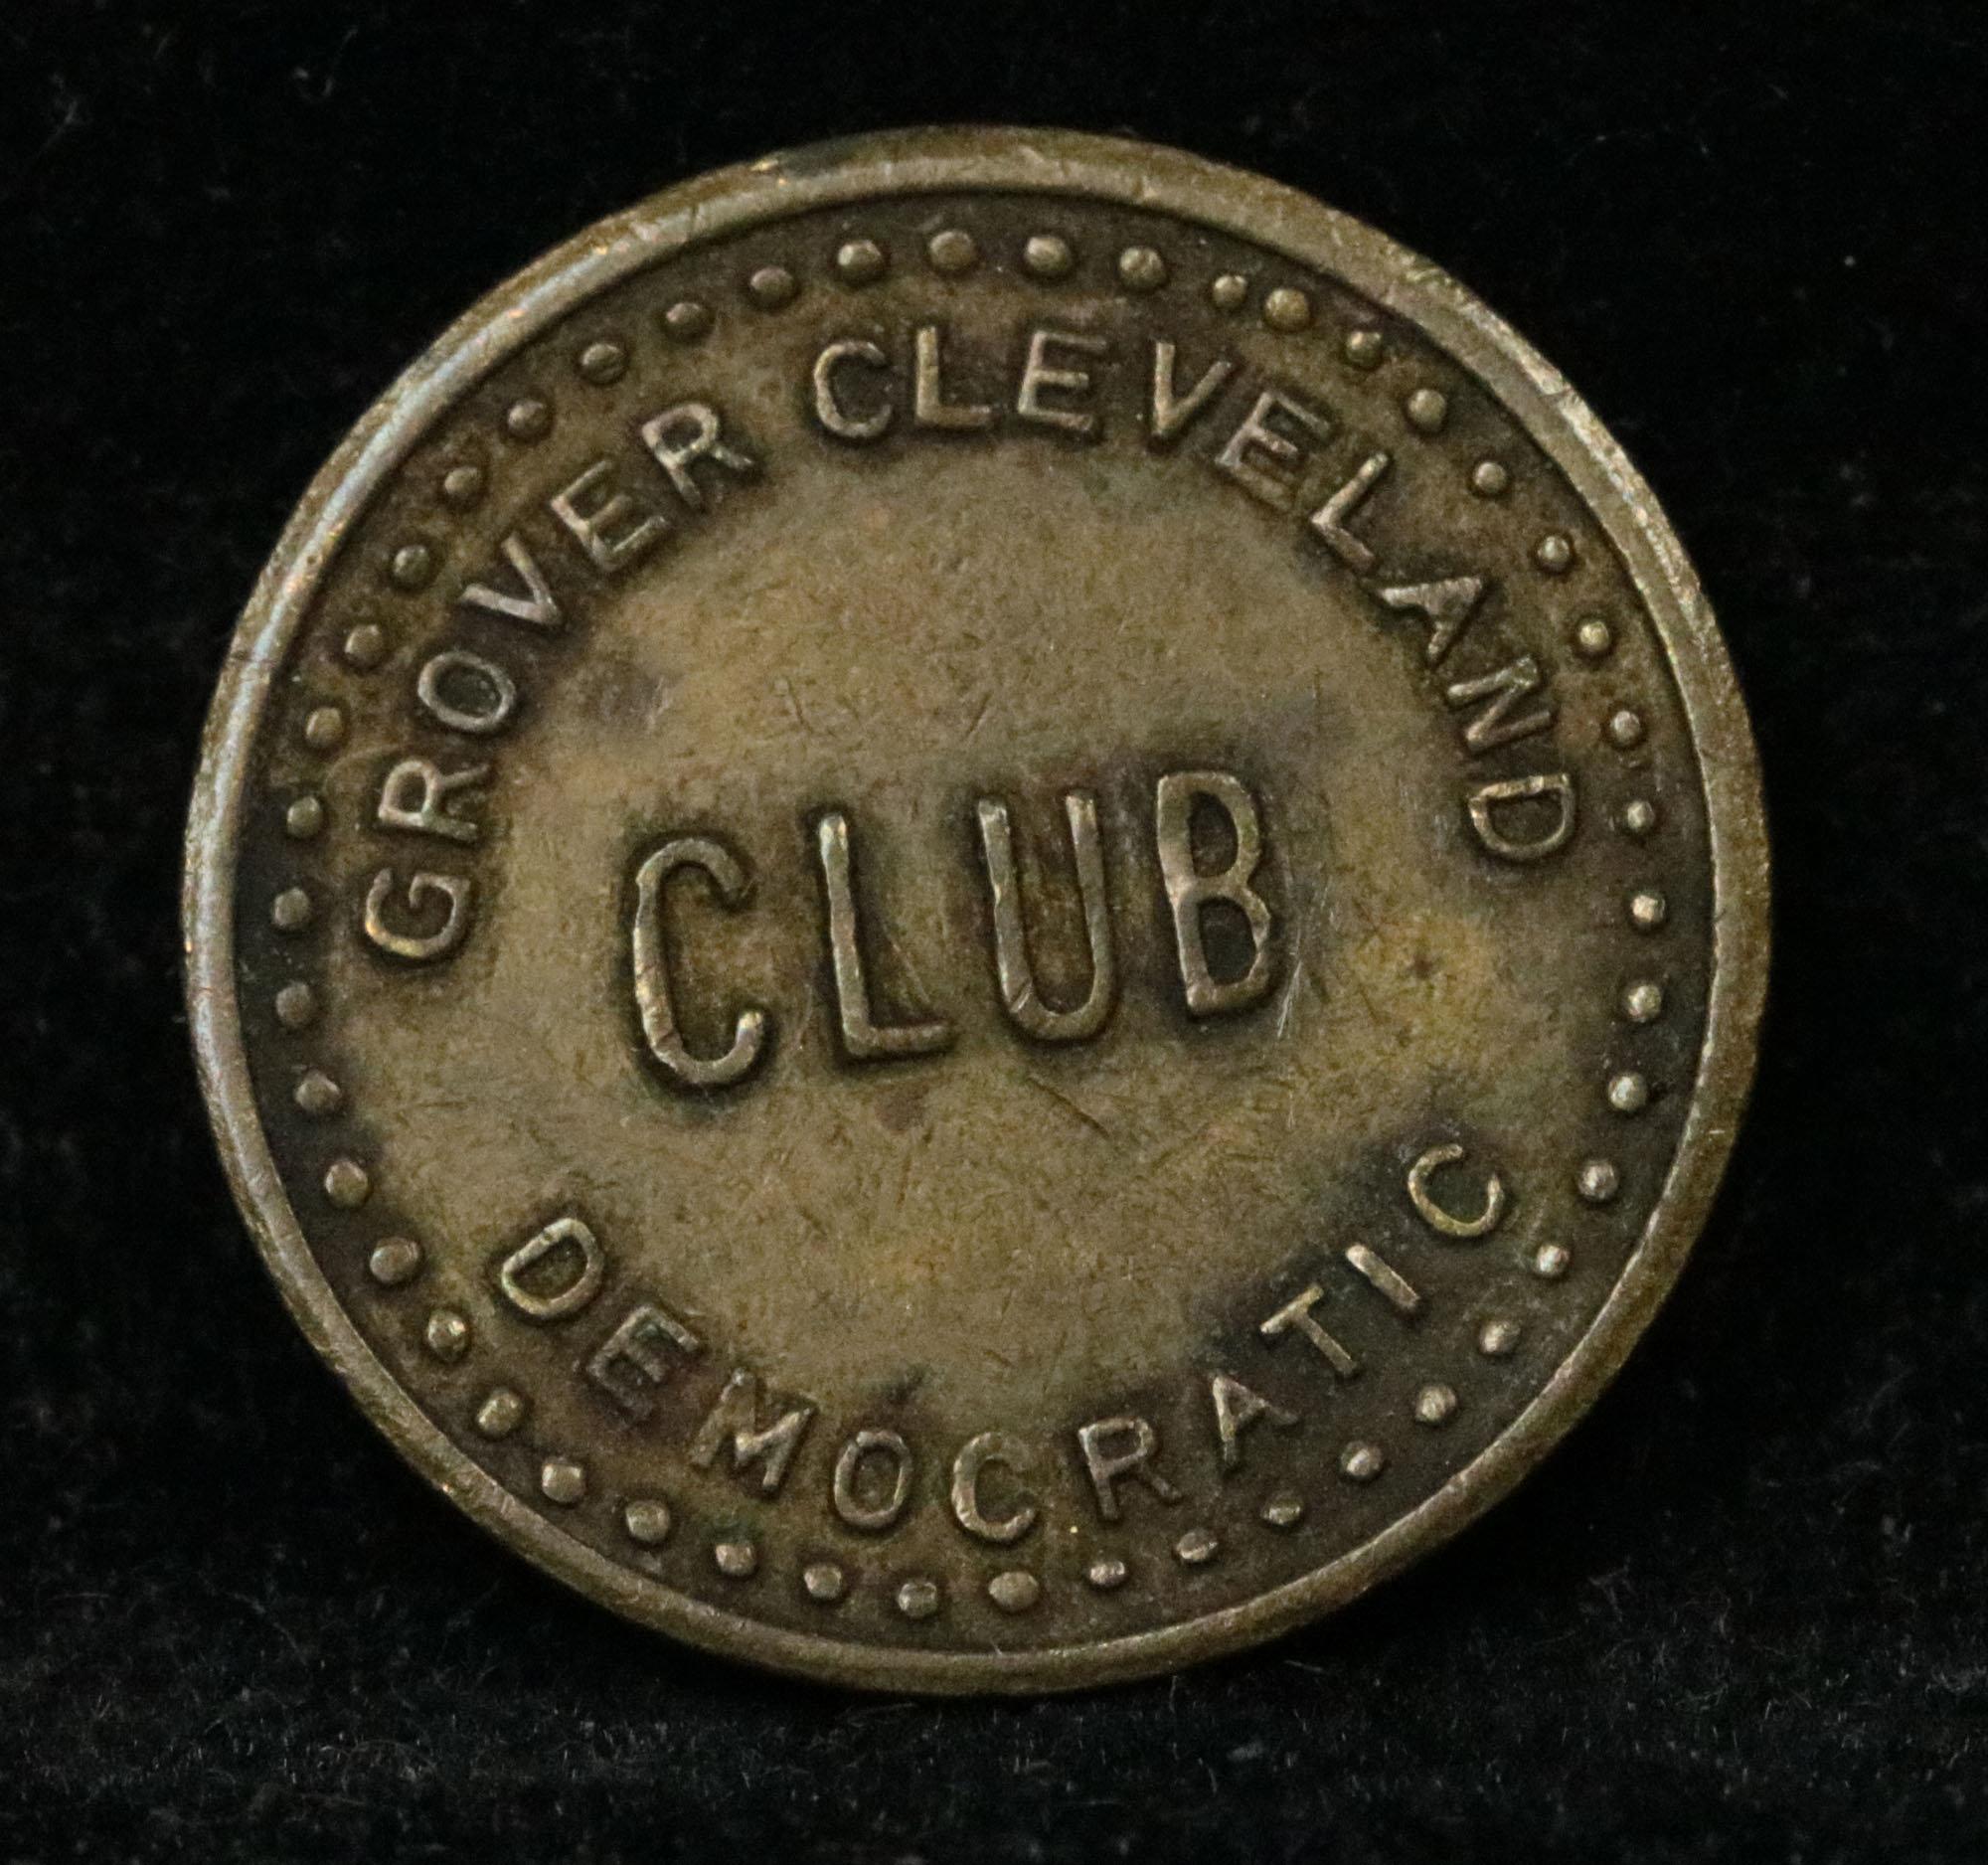 Grover Cleveland Democratic Club Political Token Grades AU, Almost Unc